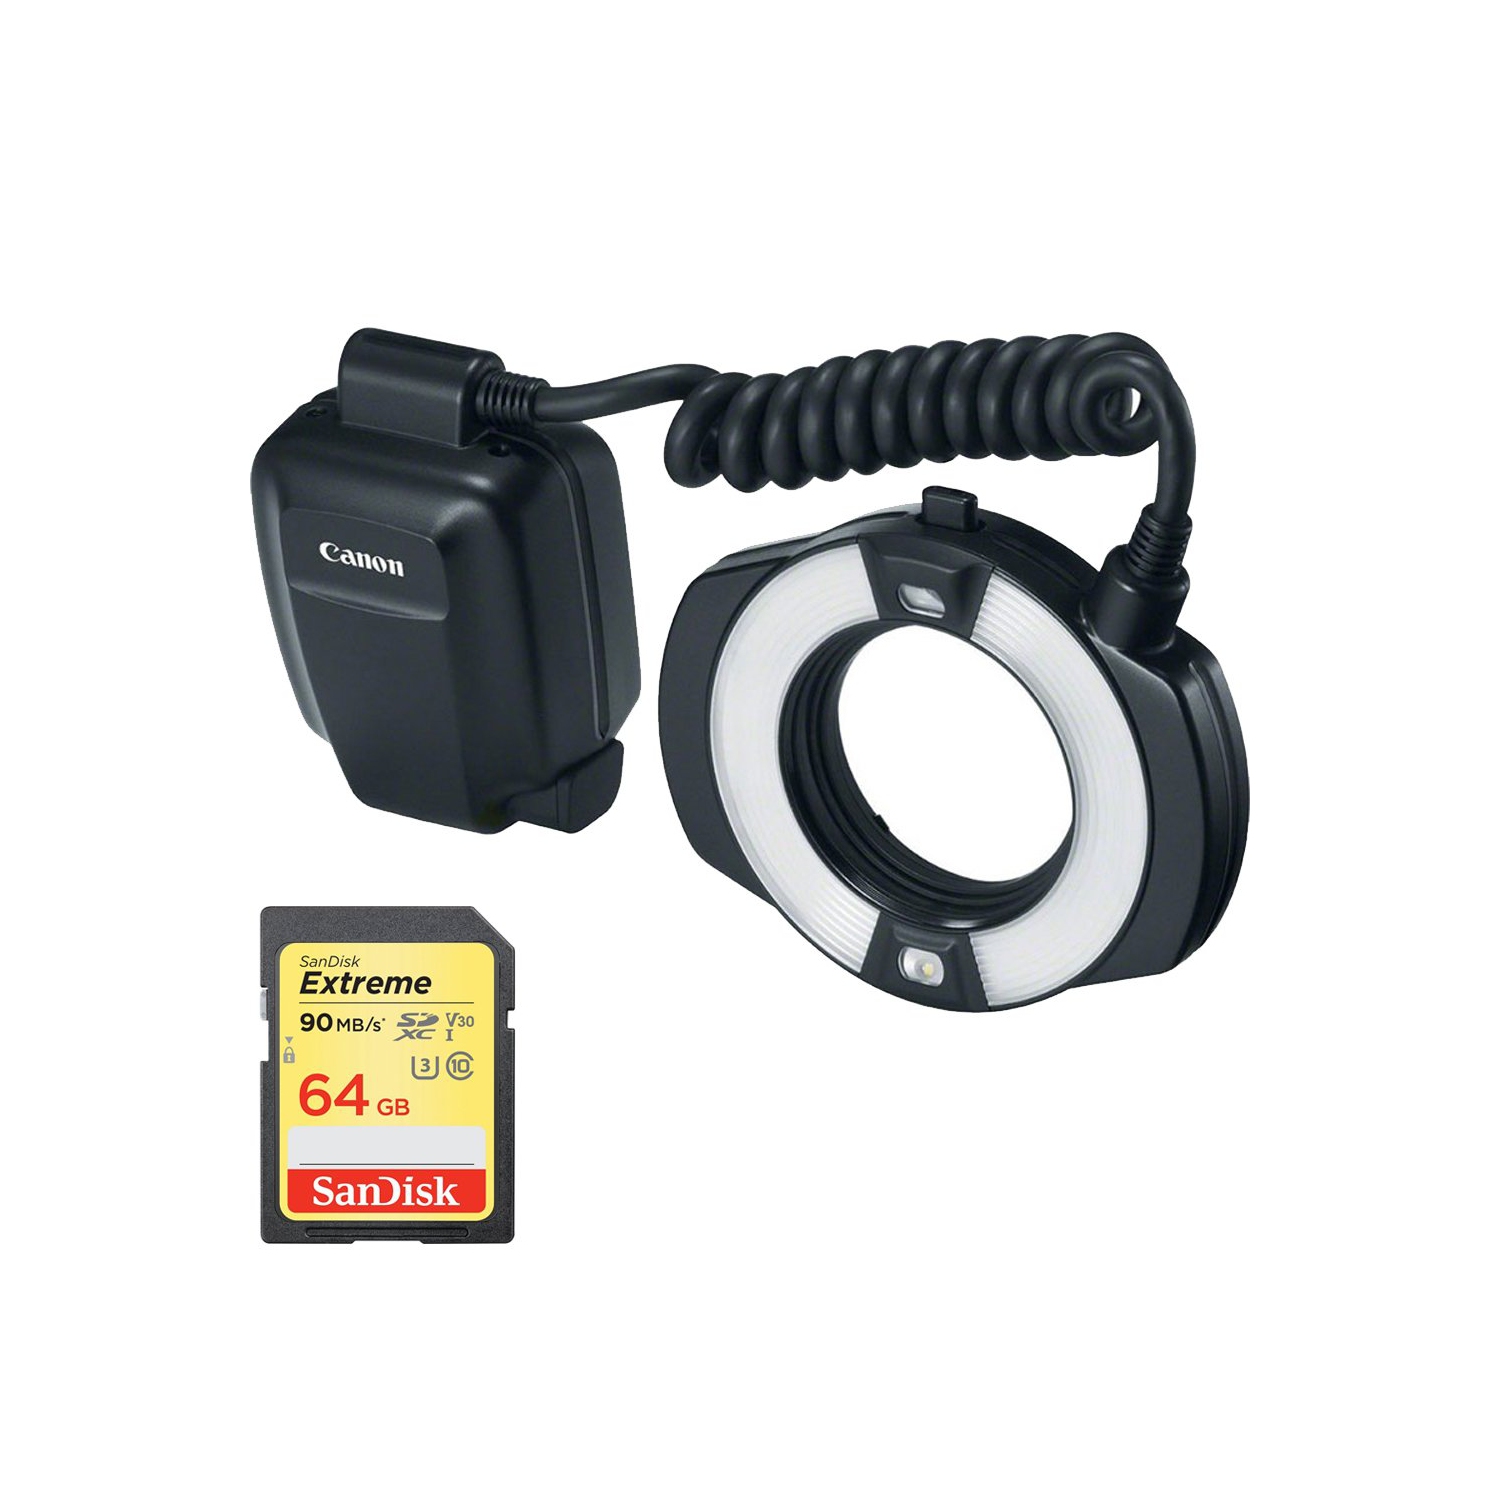 Canon Macro Ring Lite MR-14EX II Flash (9389B002) + Sandisk 64GB Extreme SD Memory Card UHS-I Bundle